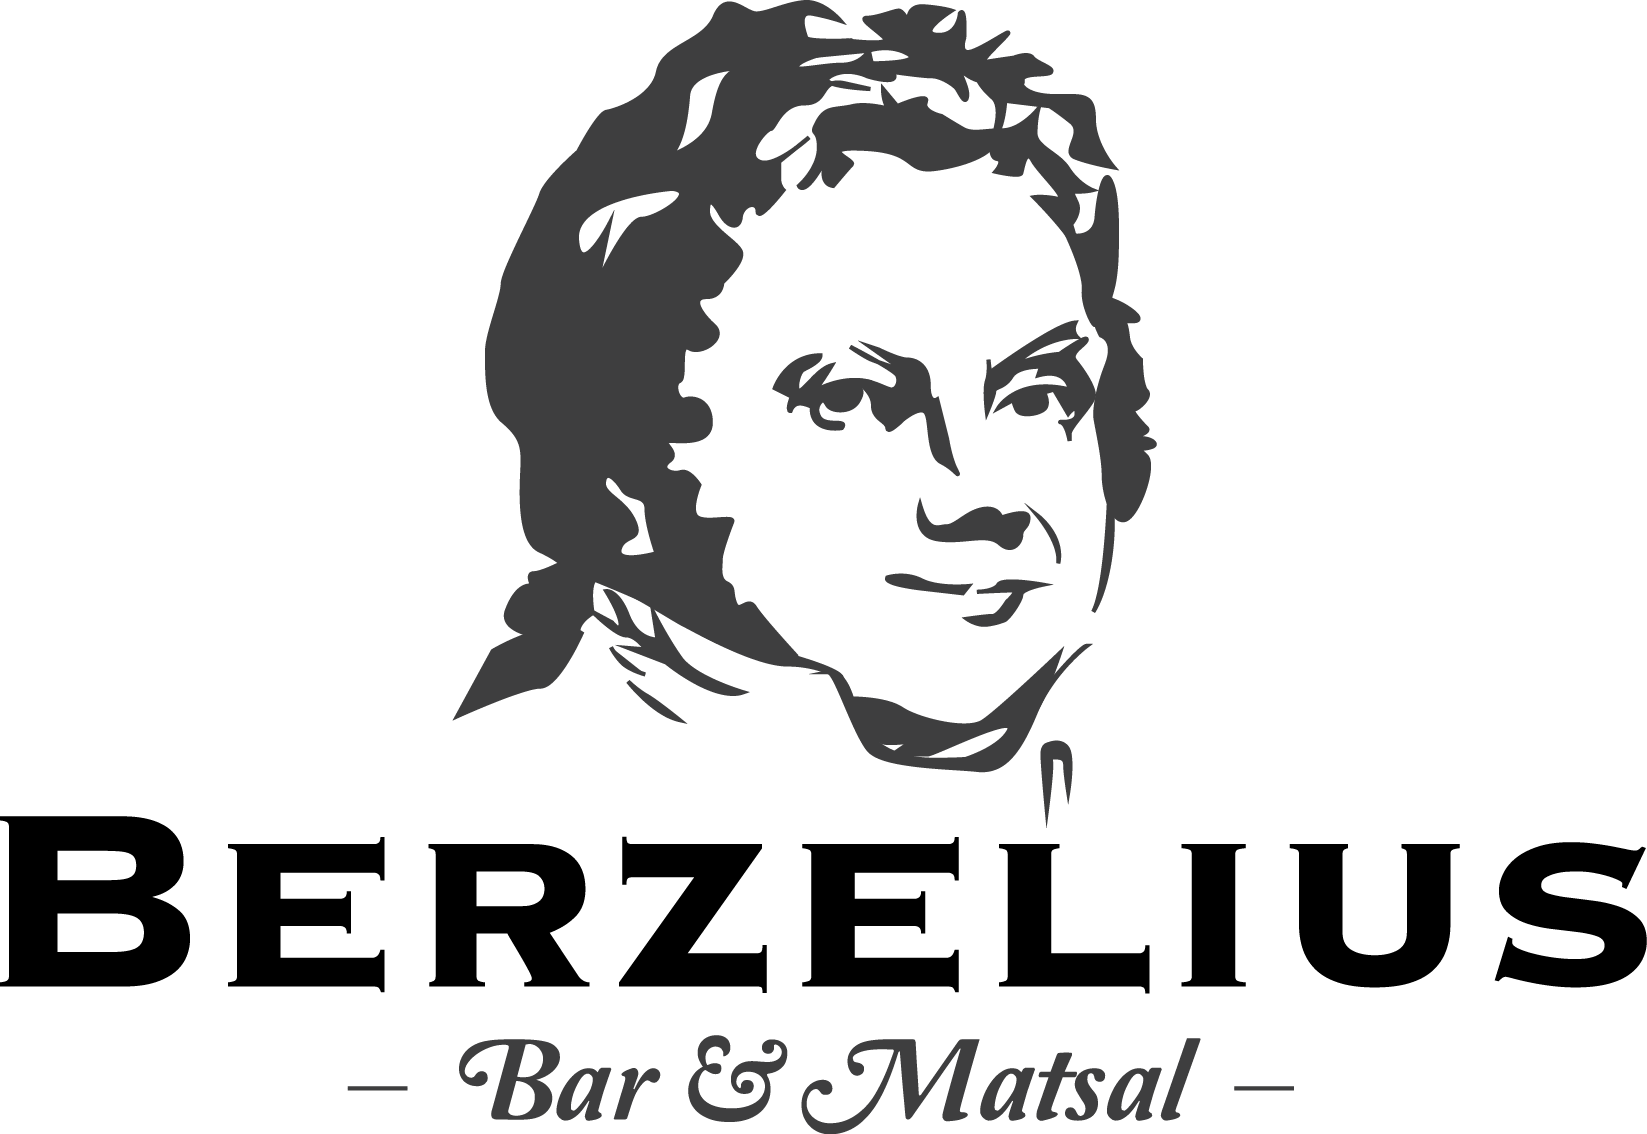 Berzelius Bar & Matsal